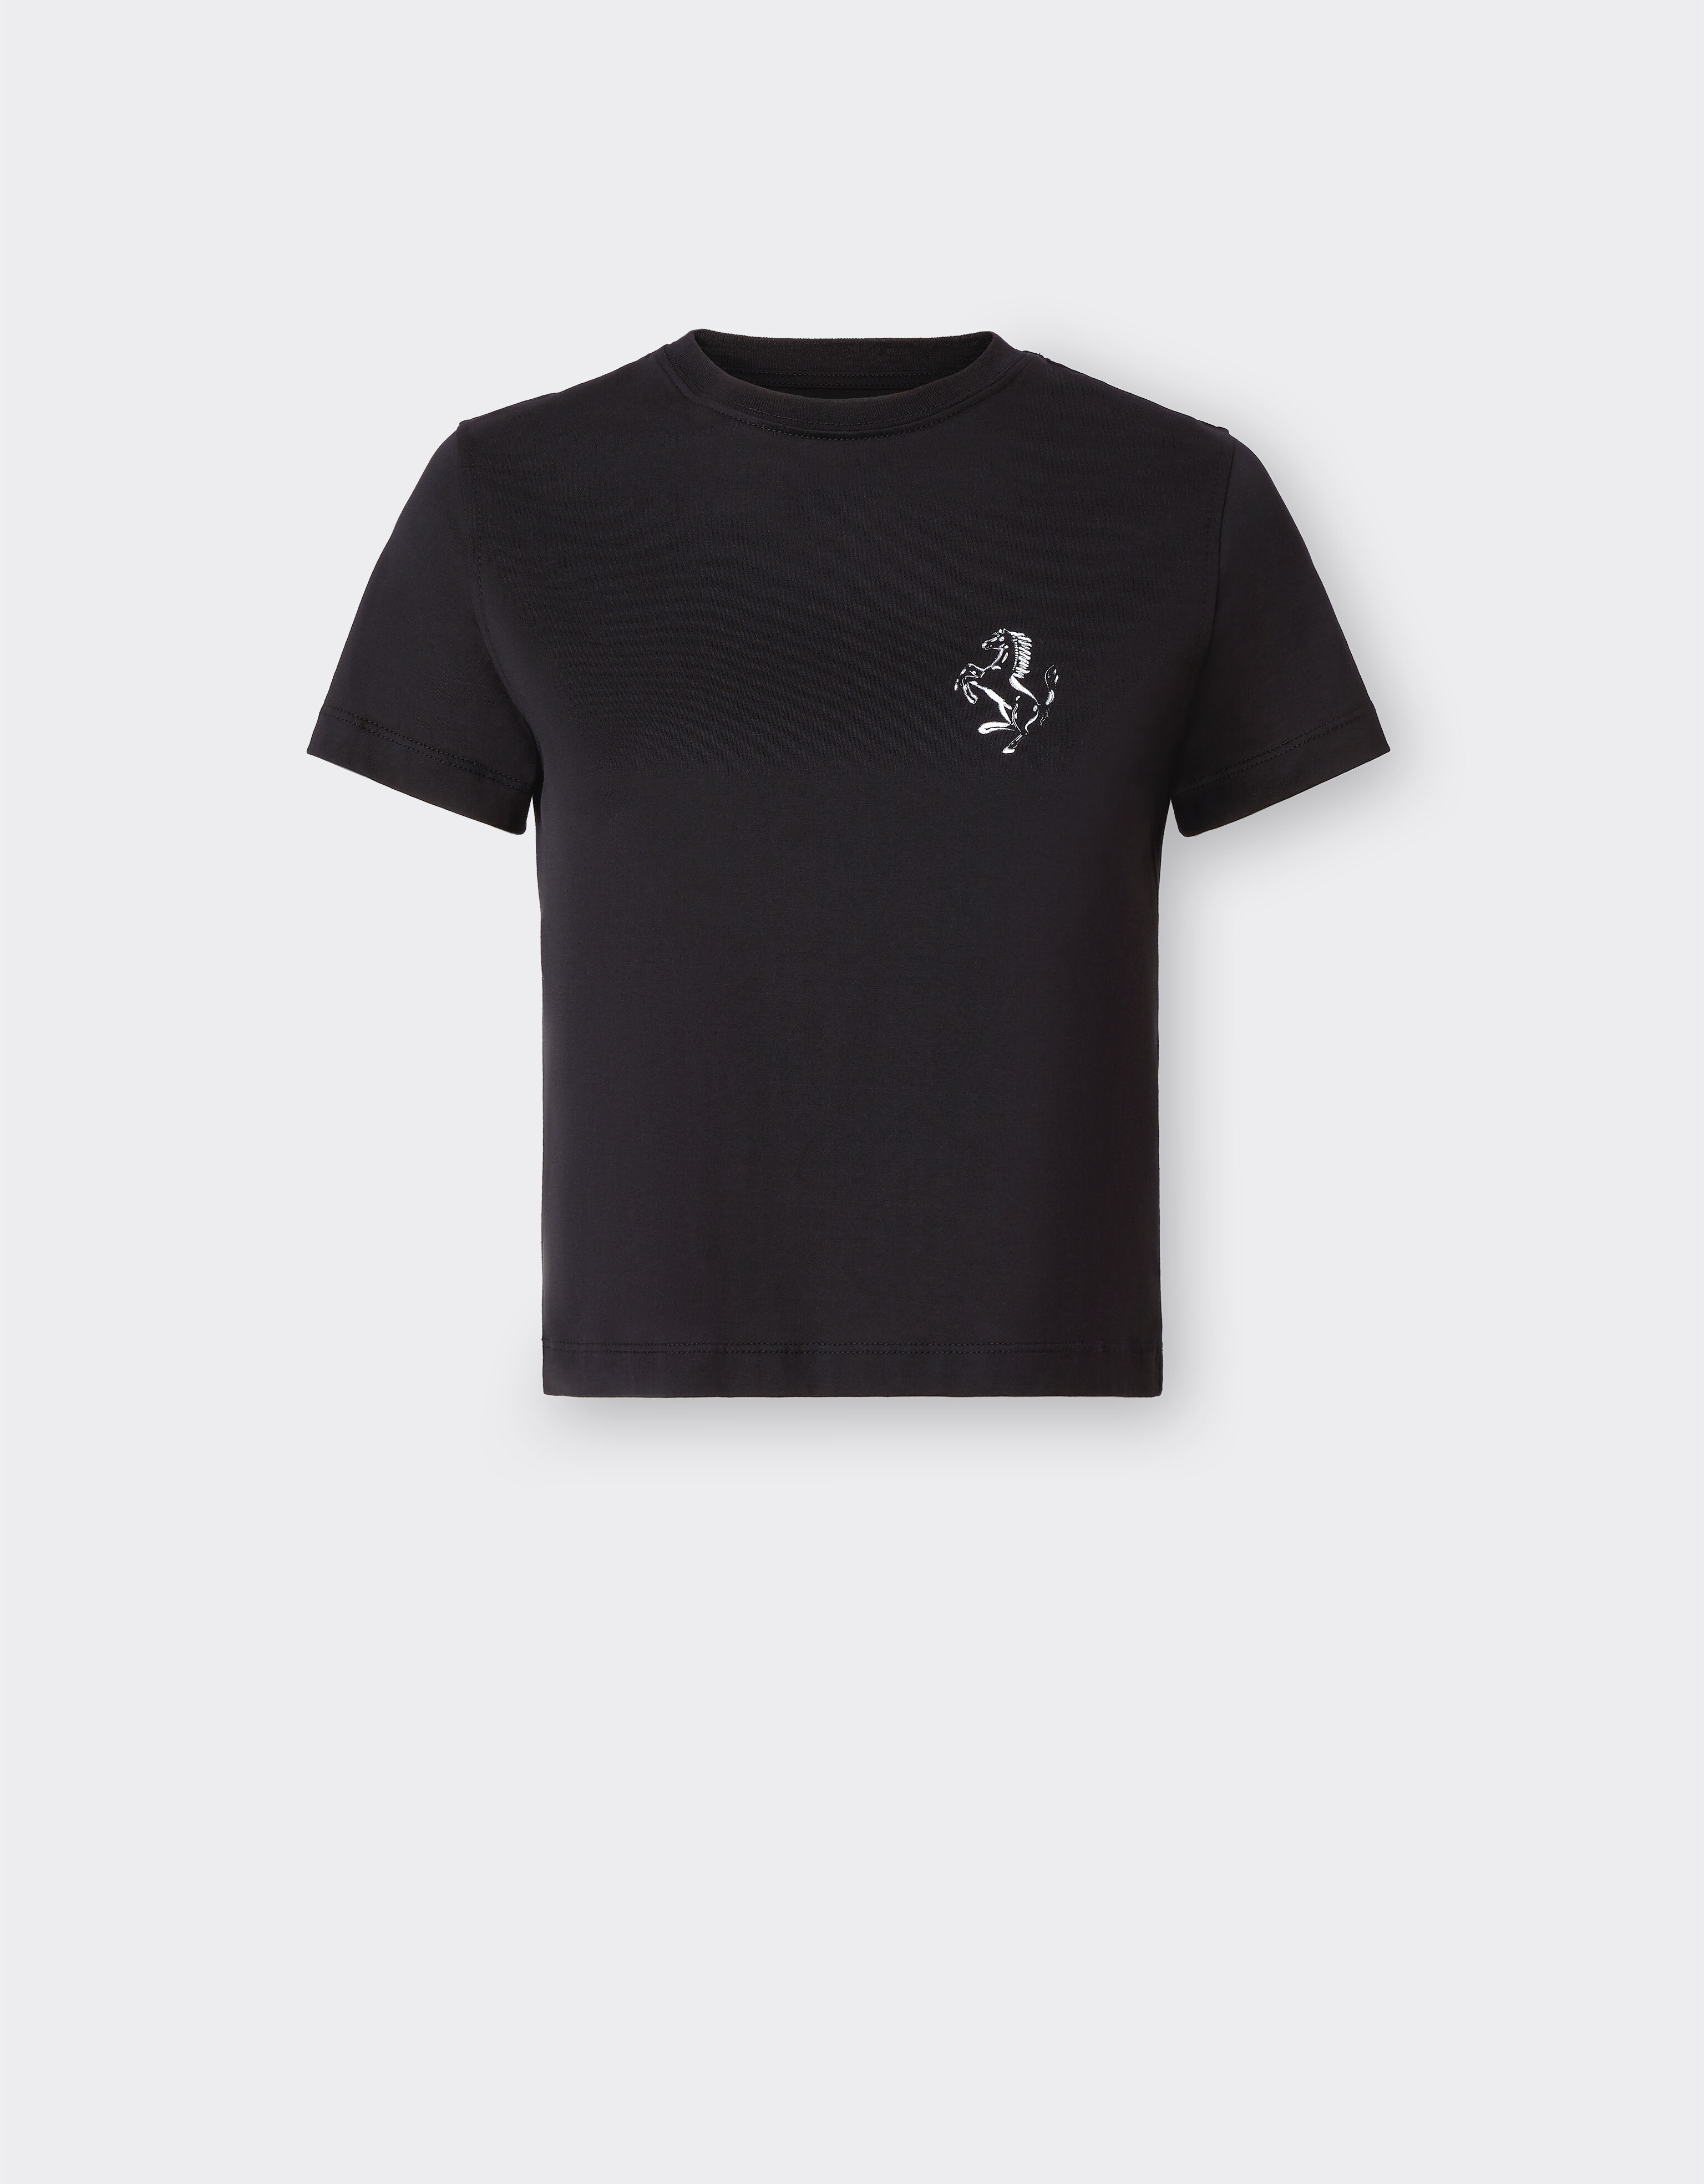 Ferrari Cotton T-shirt with Prancing Horse detail Black 20134f